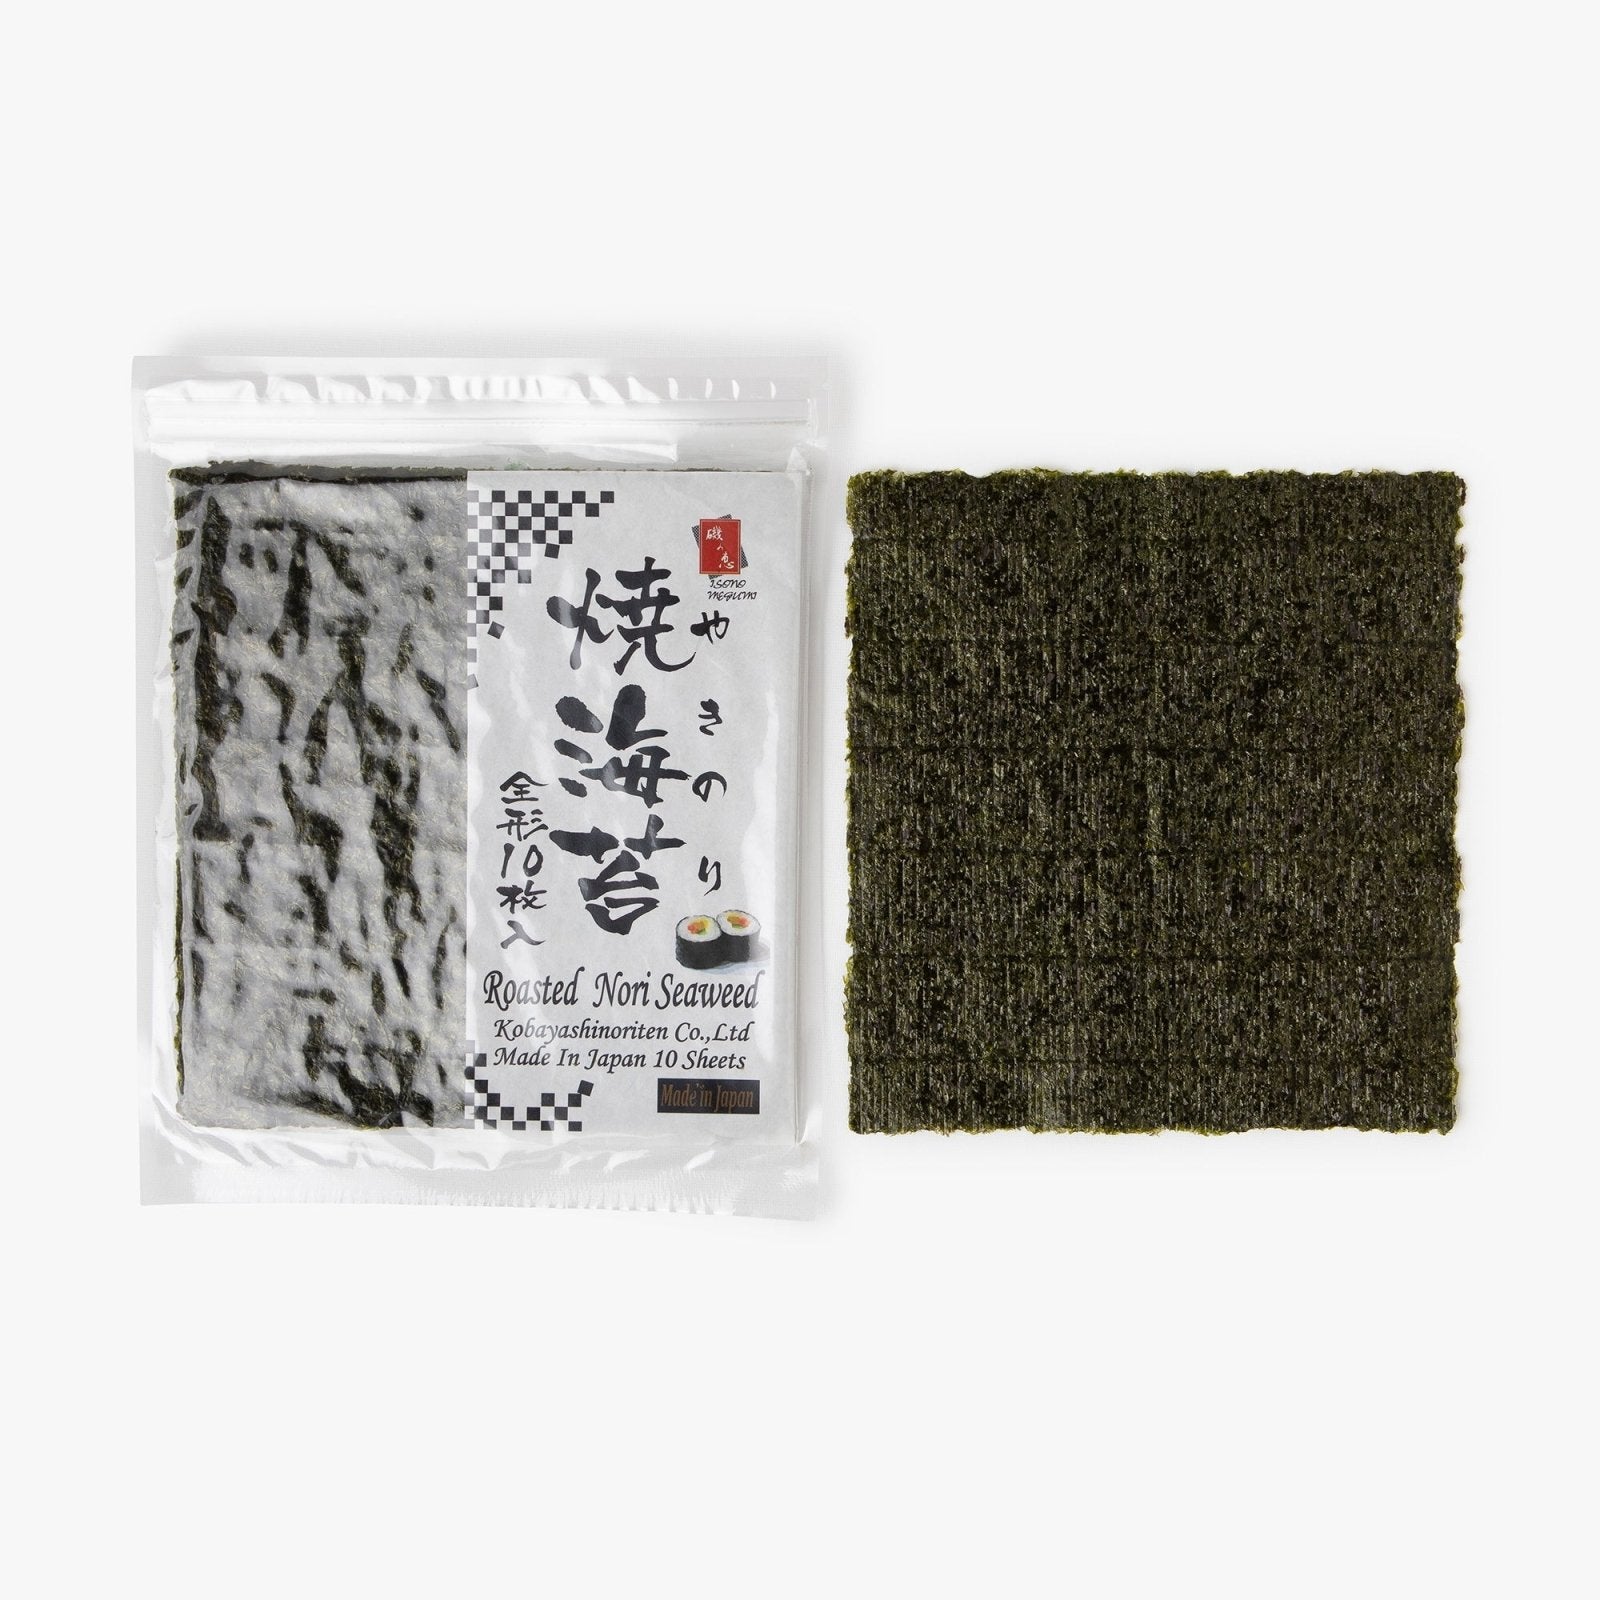 Feuilles d'algue nori grillées - 30g - Kobayashi Noriten - iRASSHAi